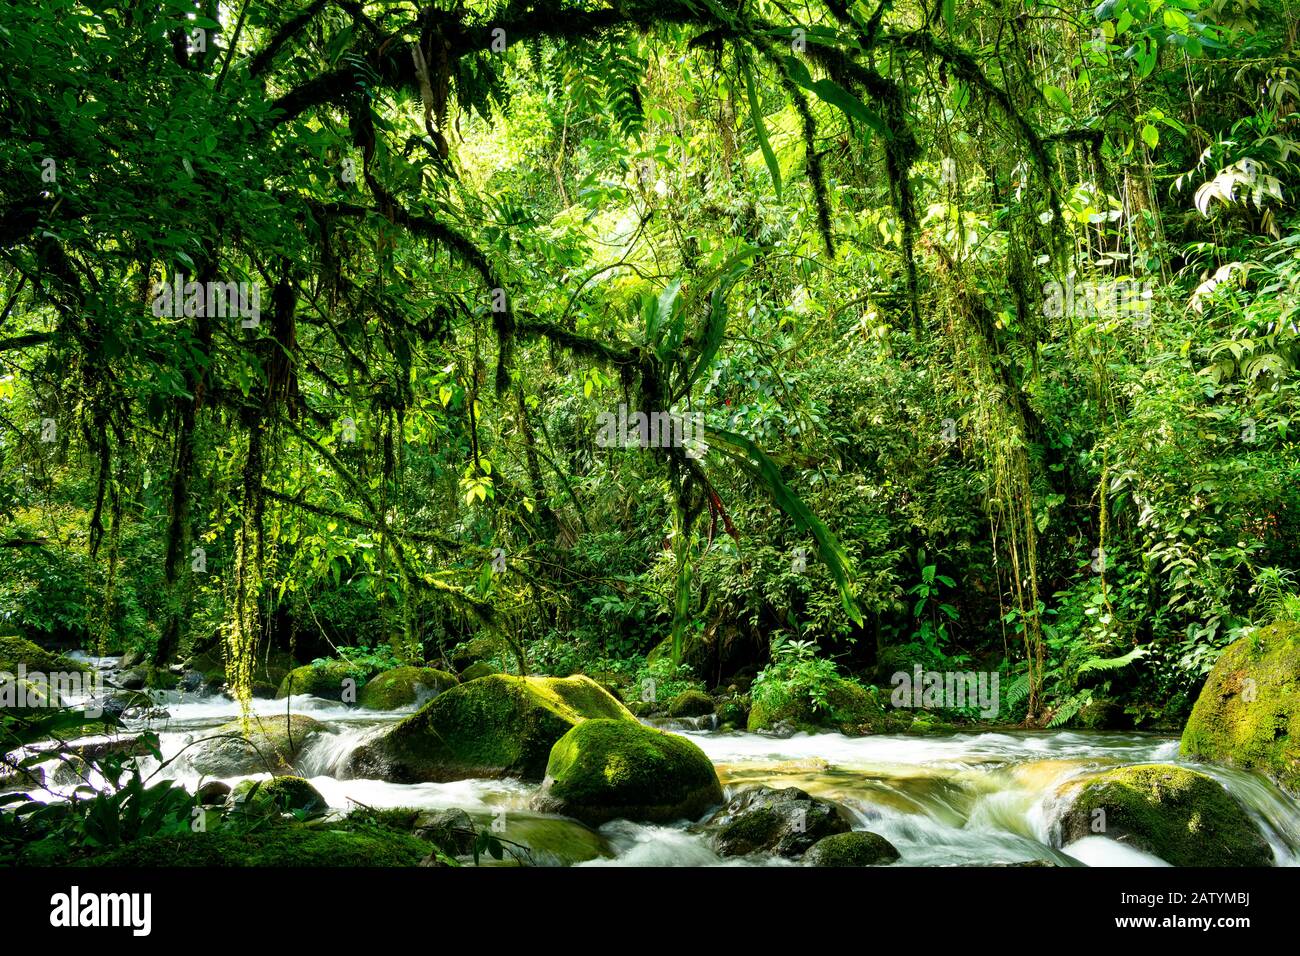 Rainforest landscape with dense vegetation and river Stock Photo